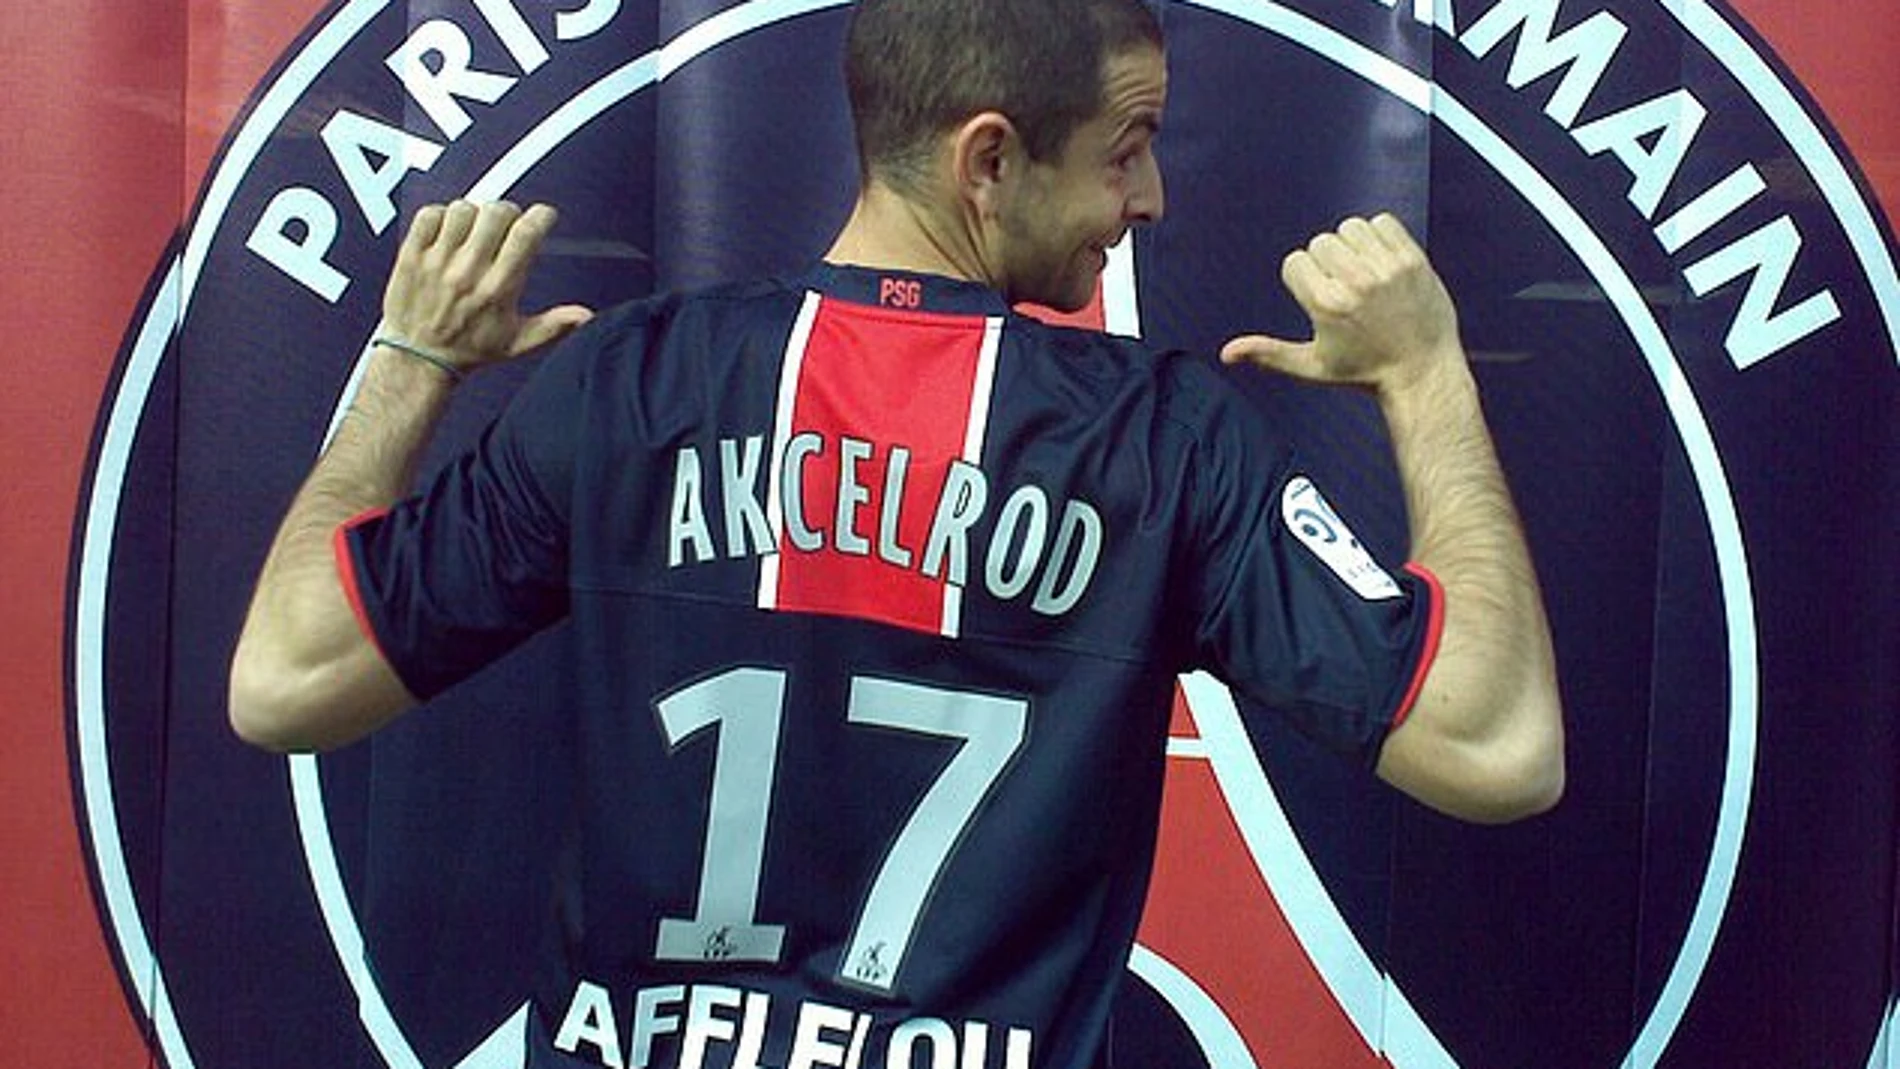 Gregoire Akcelrod se hizo pasar por futbolista del PSG.